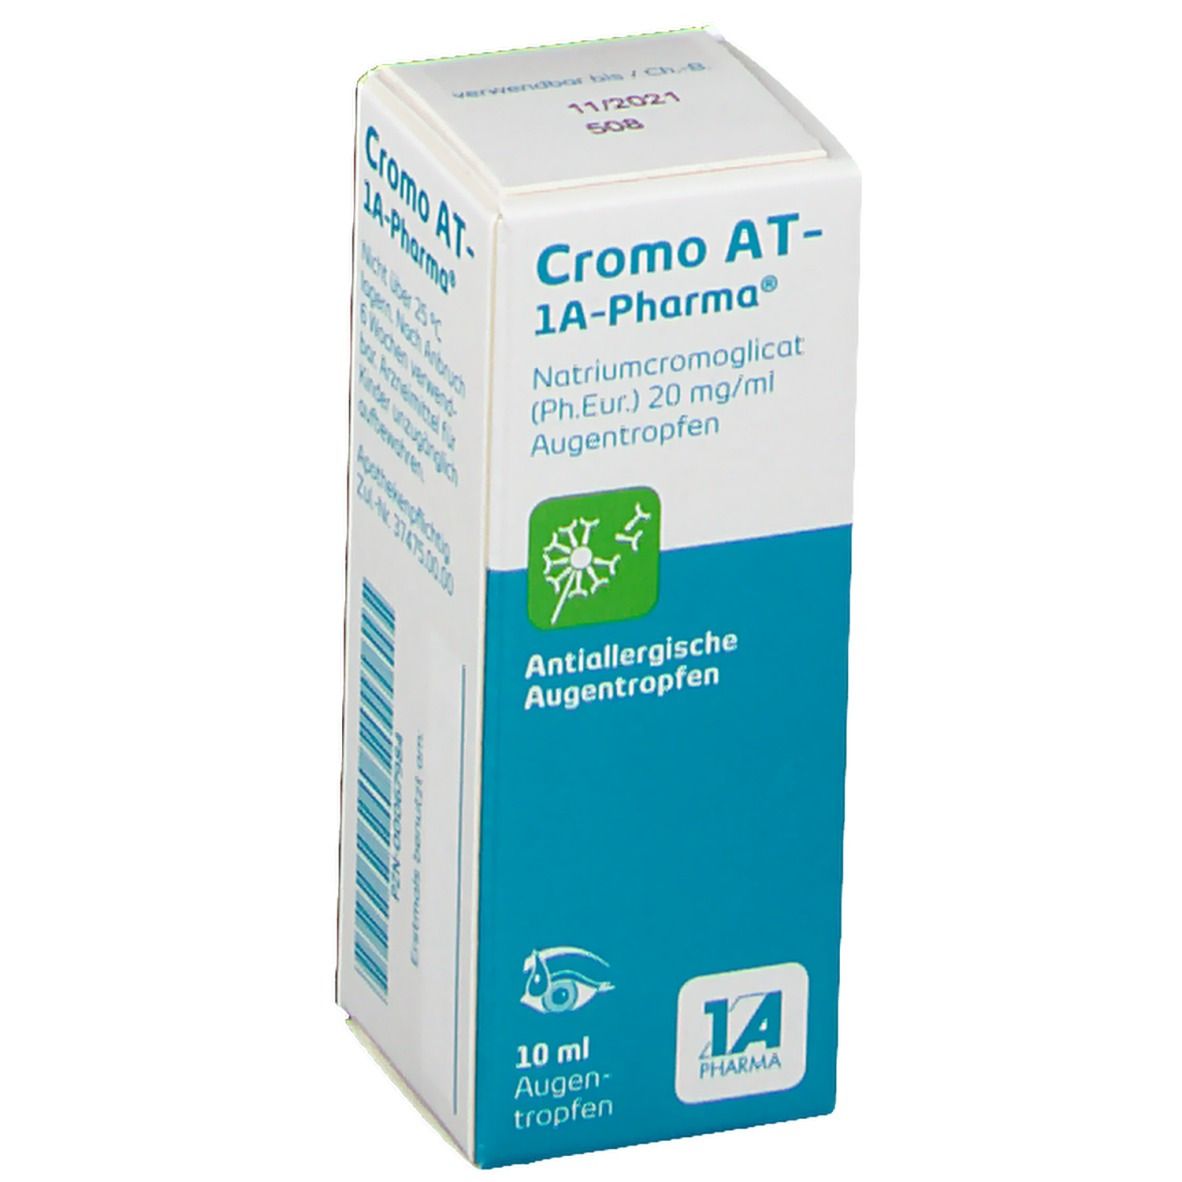 Cromo AT – 1A-Pharma®